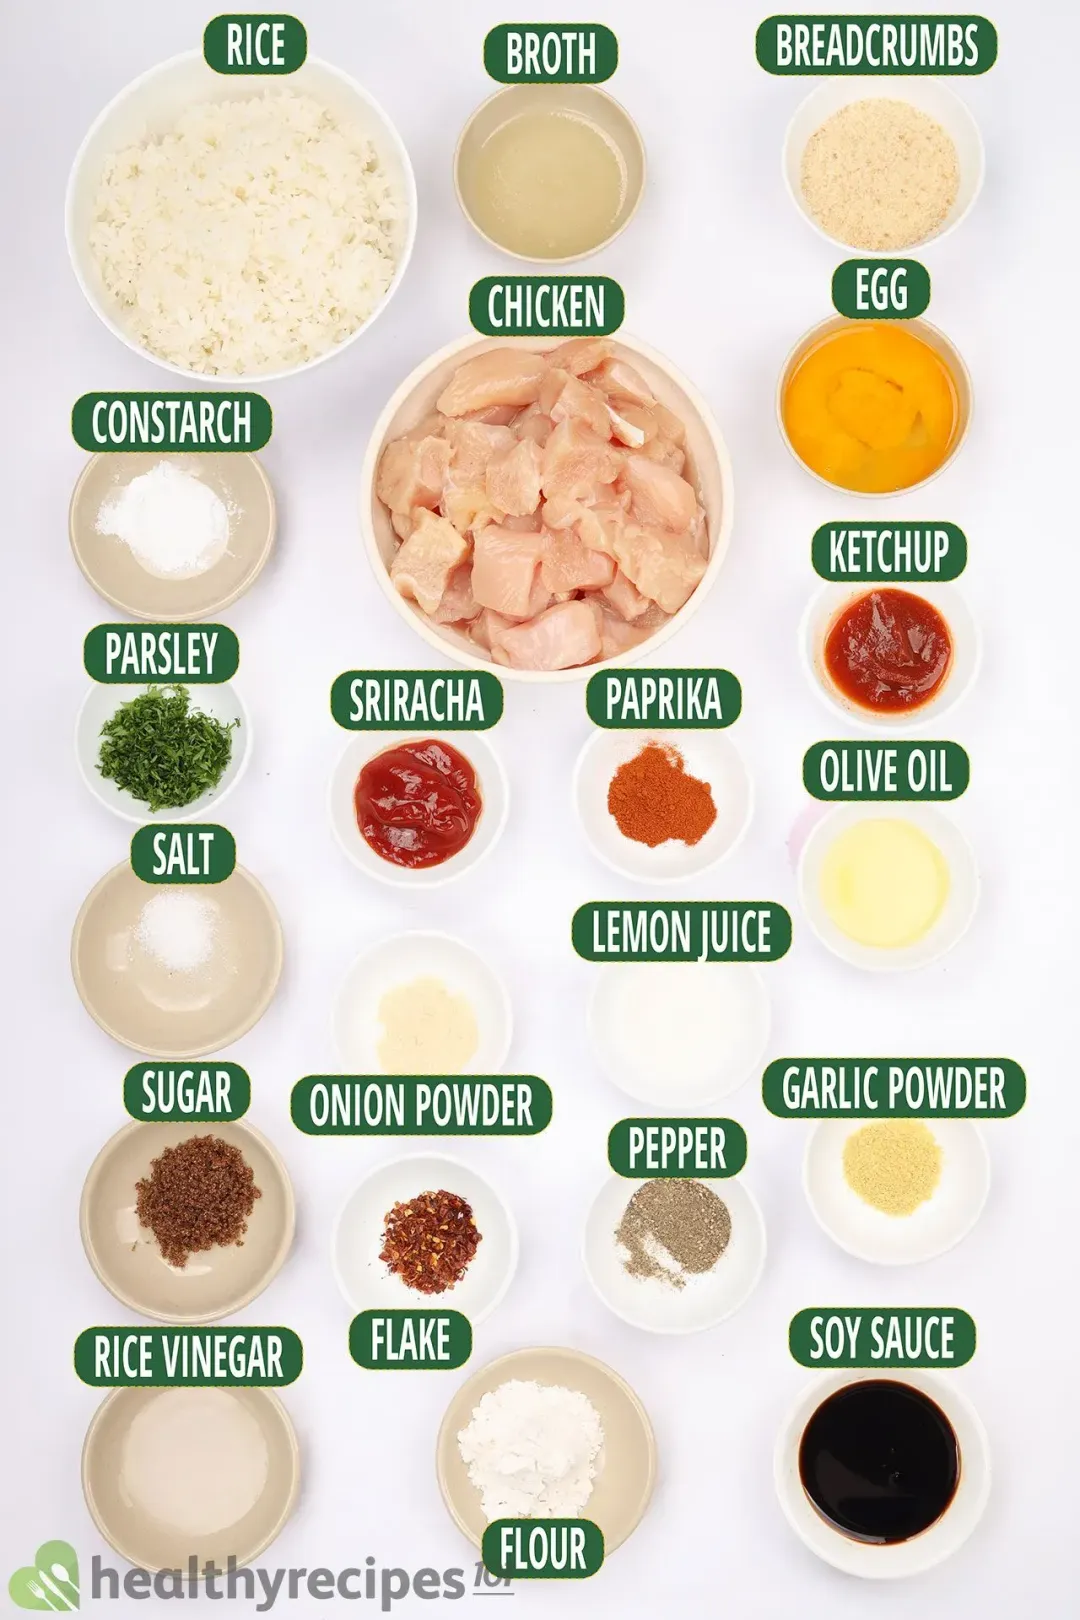 Ingredients for Chicken Meatballs